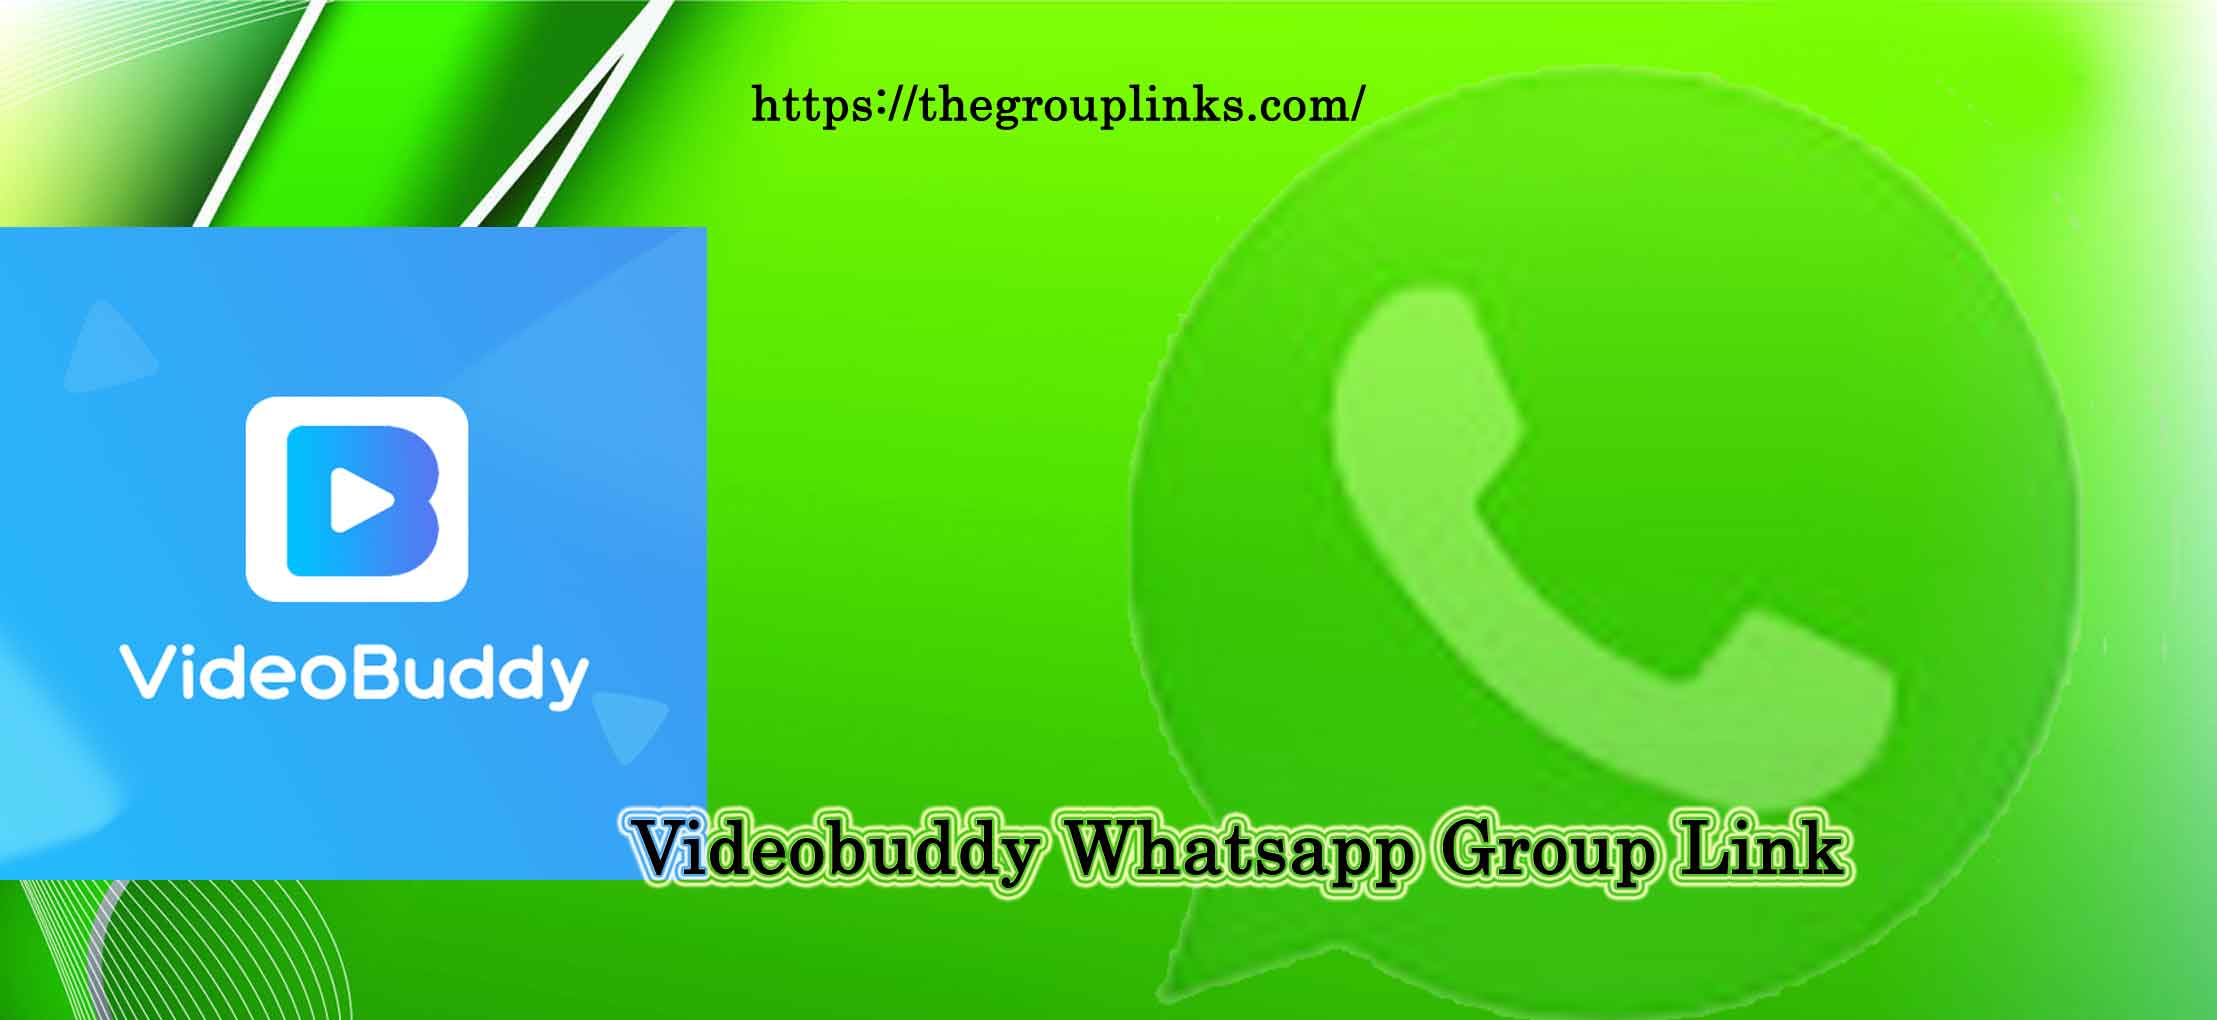 Videobuddy Whatsapp Group